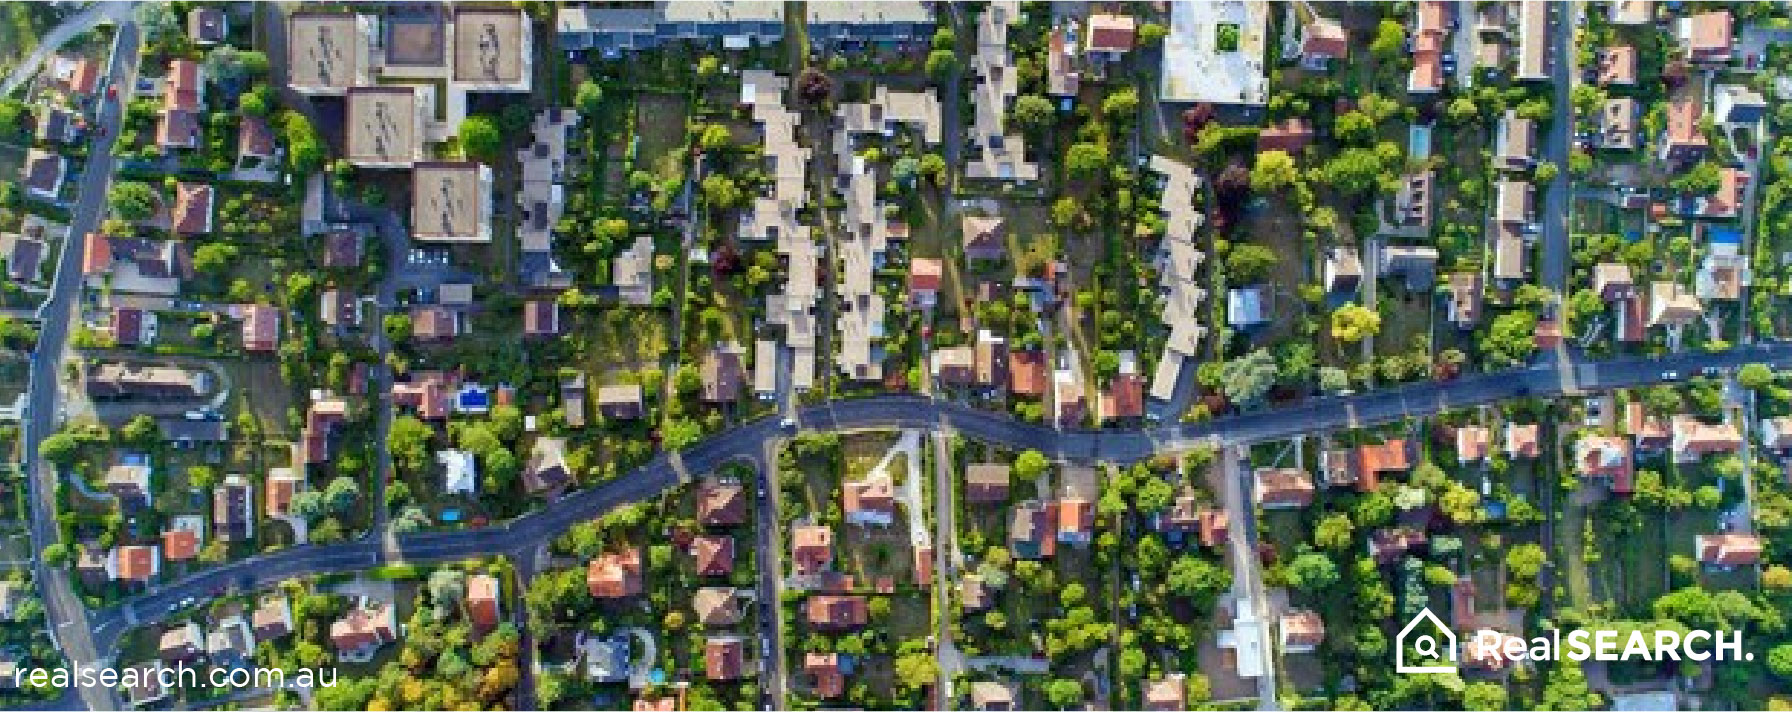 Tips for Living in High-Density Areas in Australia